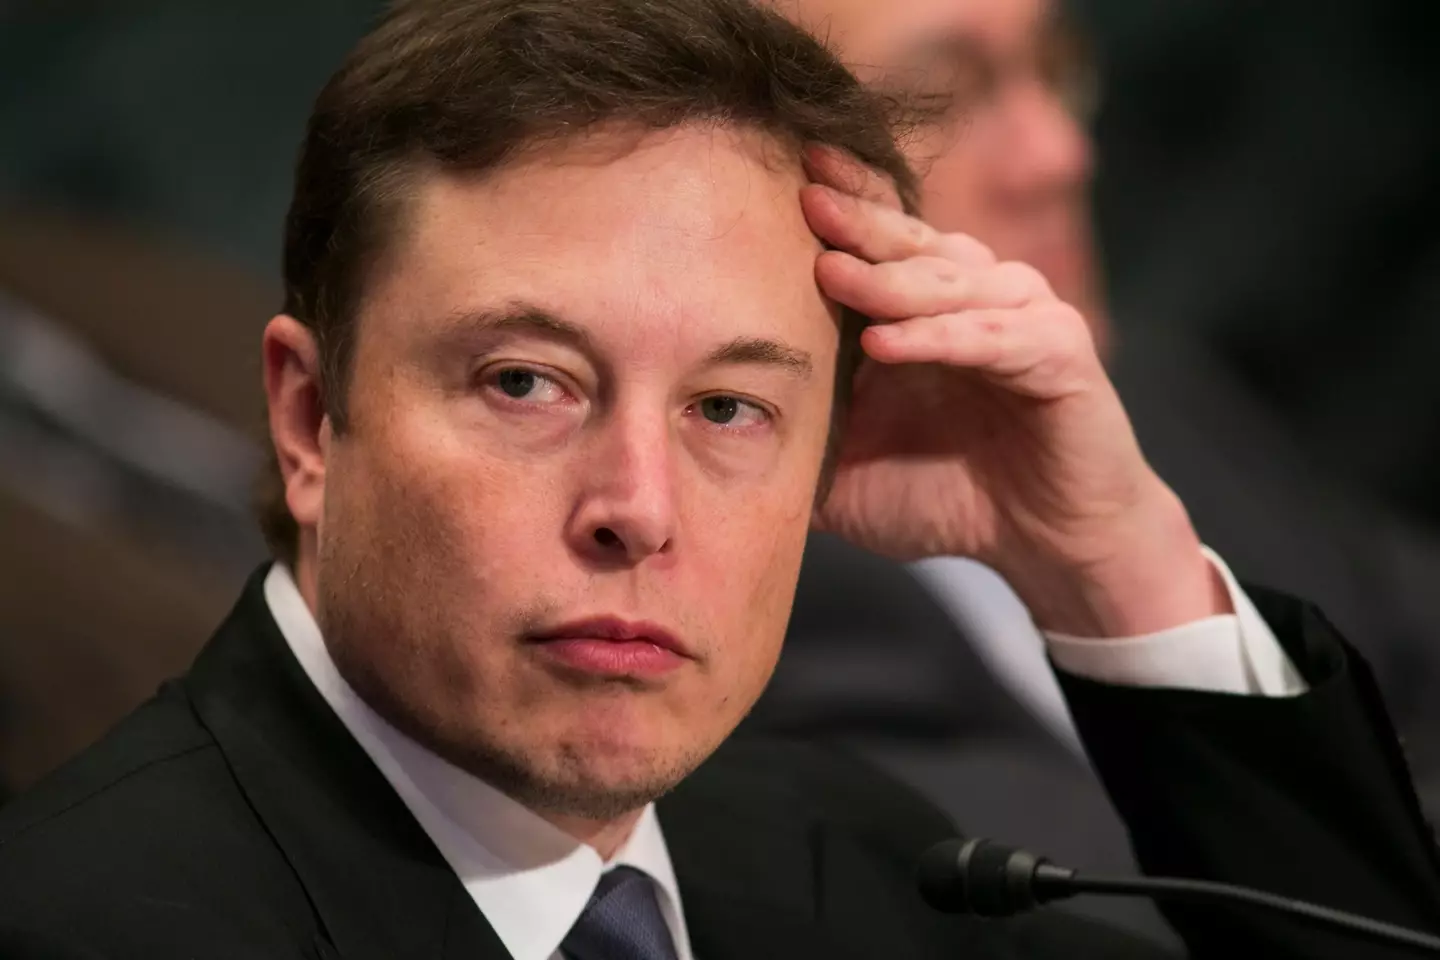 "Oh no, my billions!" - Elon Musk, probably.